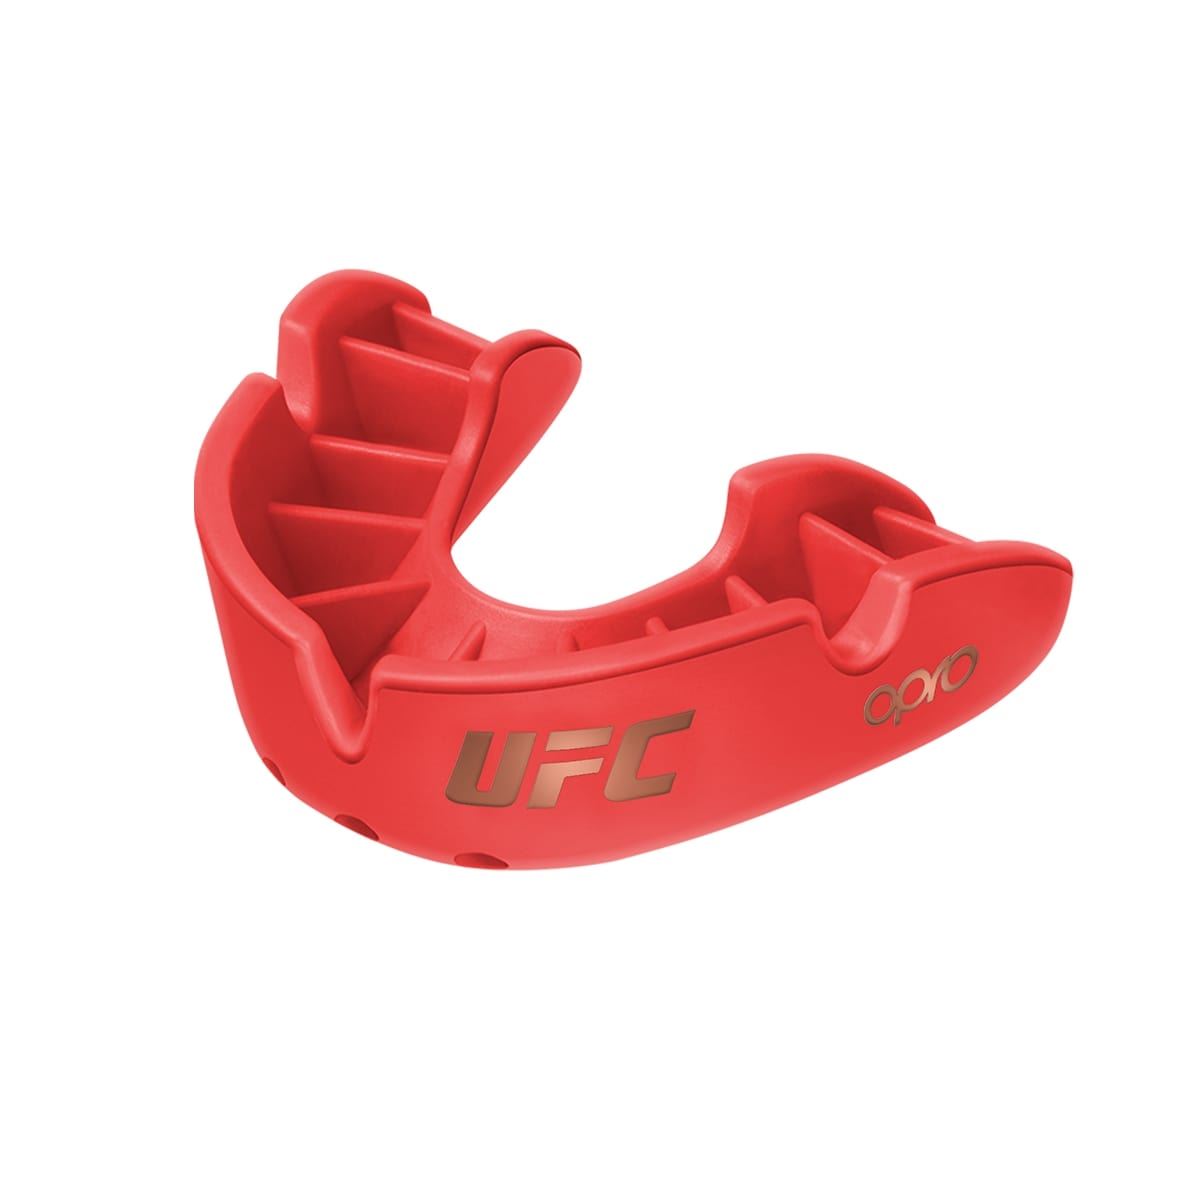 OPRO Protège-dents "UFC" Bronze Junior 2022 